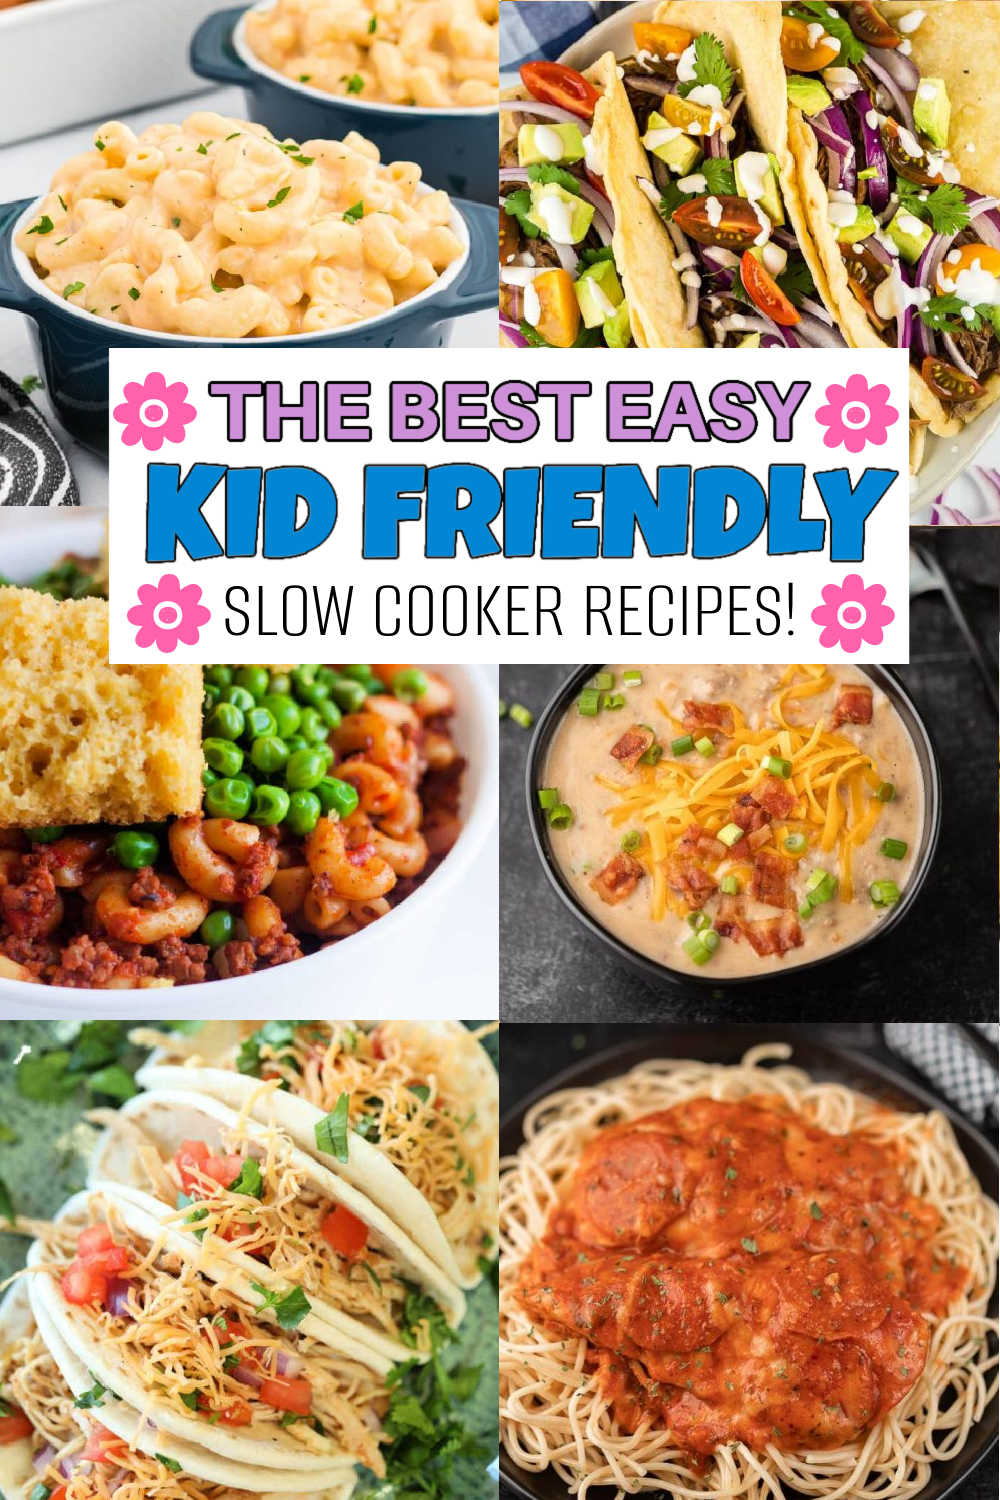 https://www.eatingonadime.com/wp-content/uploads/2022/10/Kid-Friendly-Slow-Cooker-Recipes-low.jpg